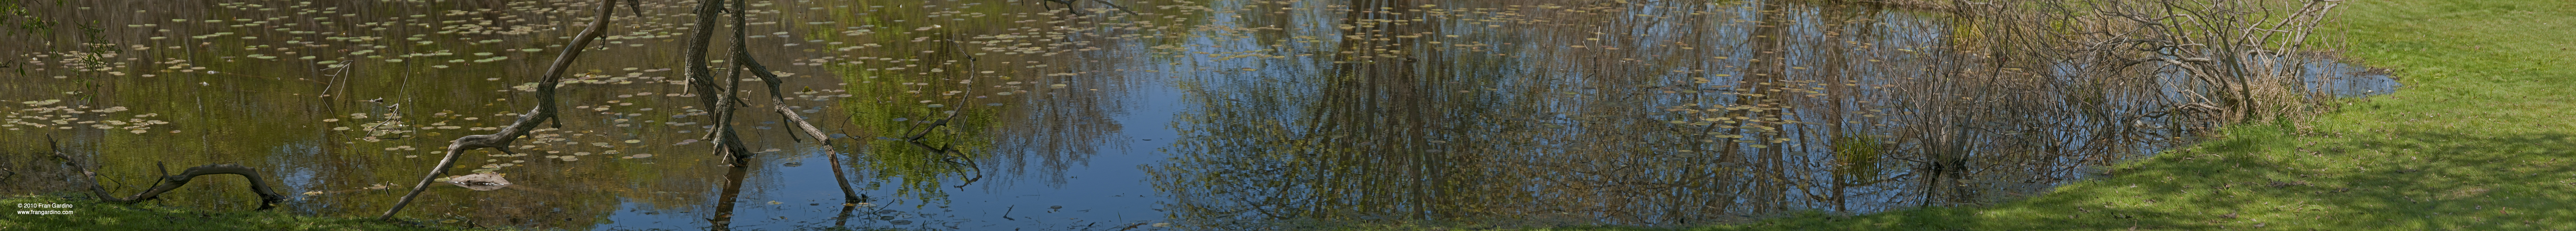 Mystic Pond Branches